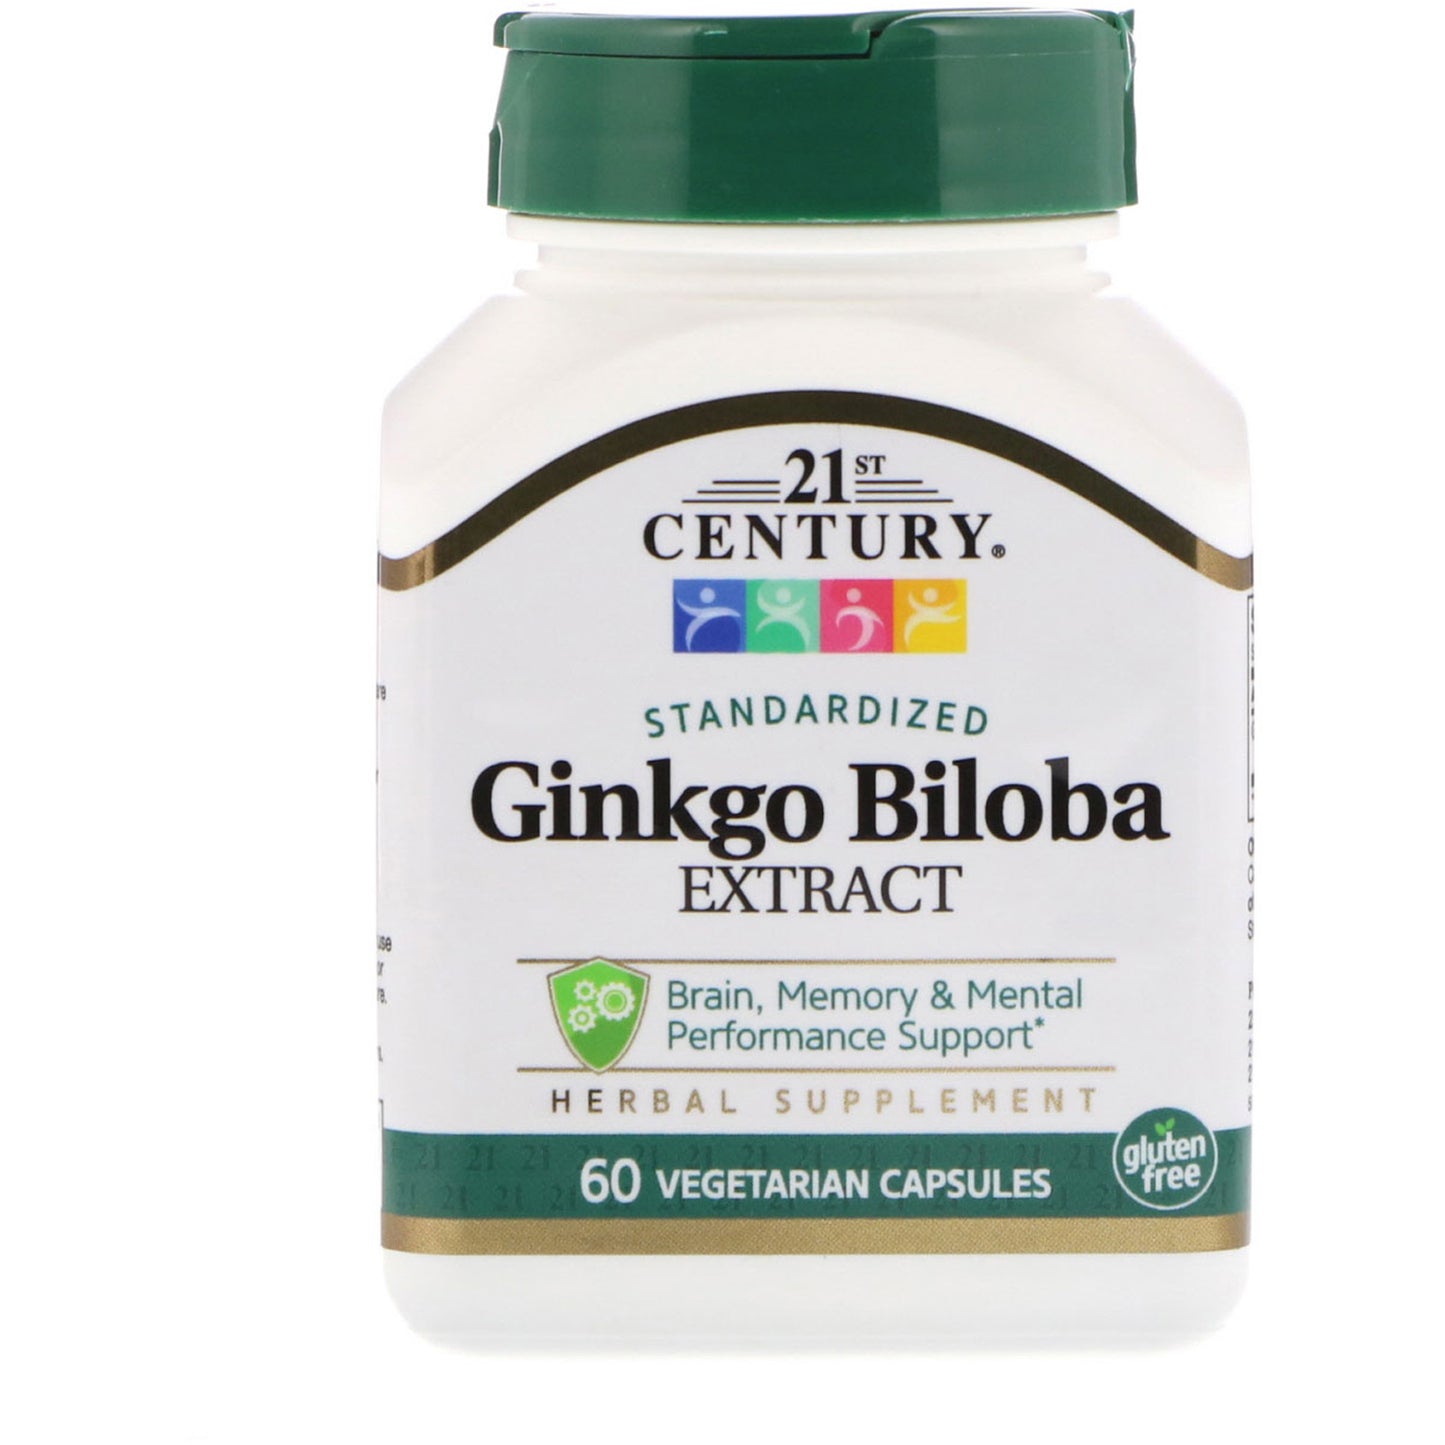 21st Century, Extracto de Ginkgo Biloba, estandarizado, 60 cápsulas vegetarianas